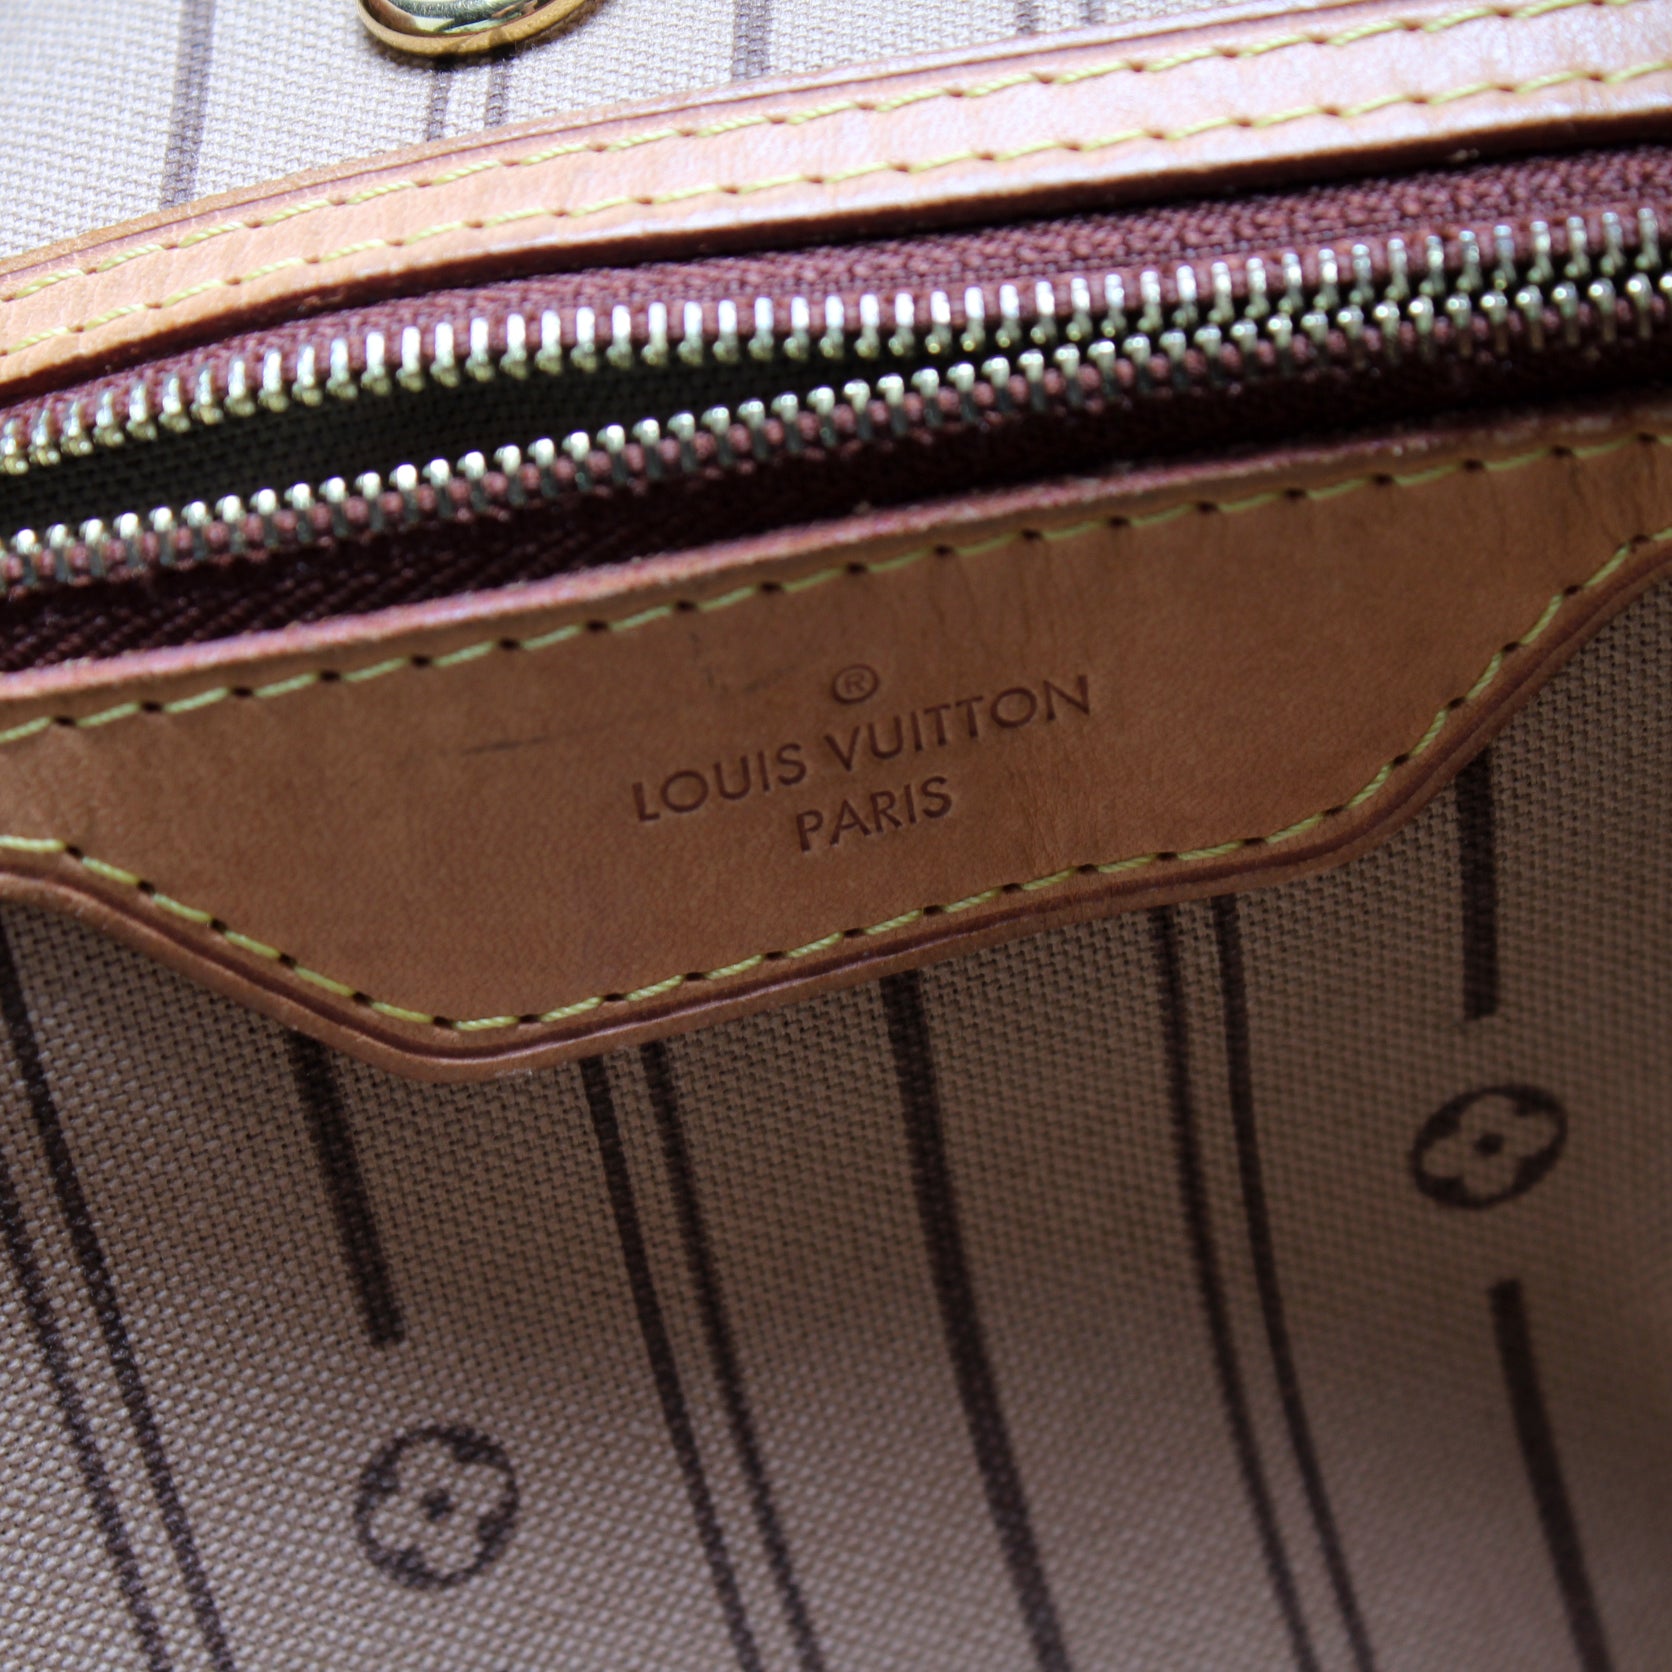 ❤️COMPARISON- Louis Vuitton Delightful PM & MM (old model) 